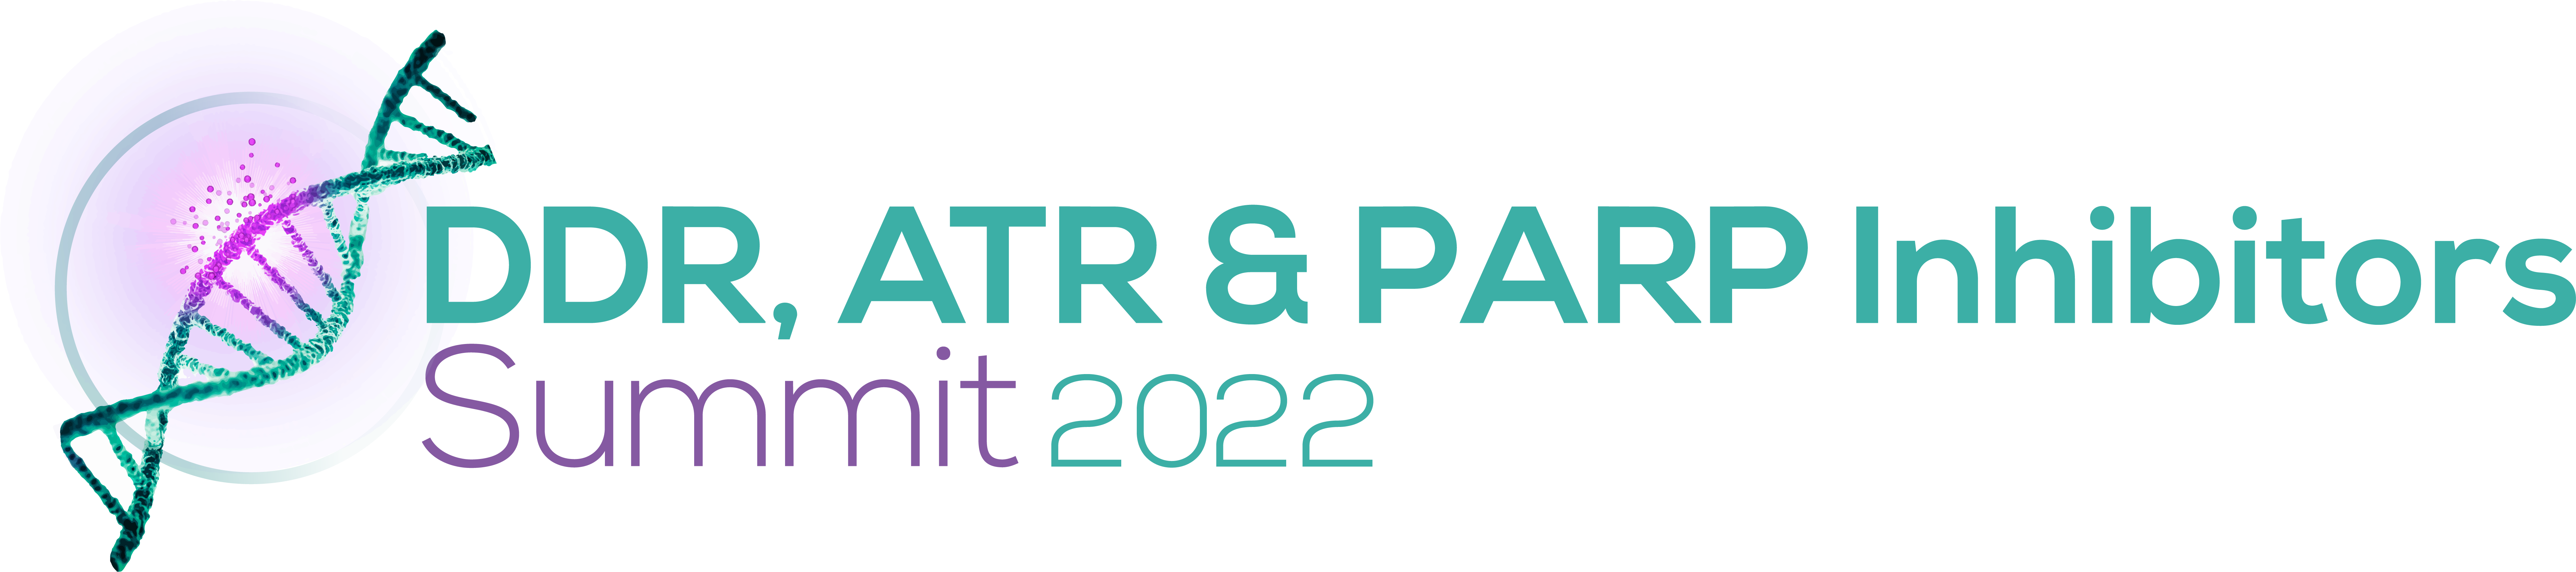 HW210825 DDR, ATR & PARP Inhibitors Summit 2022 logo